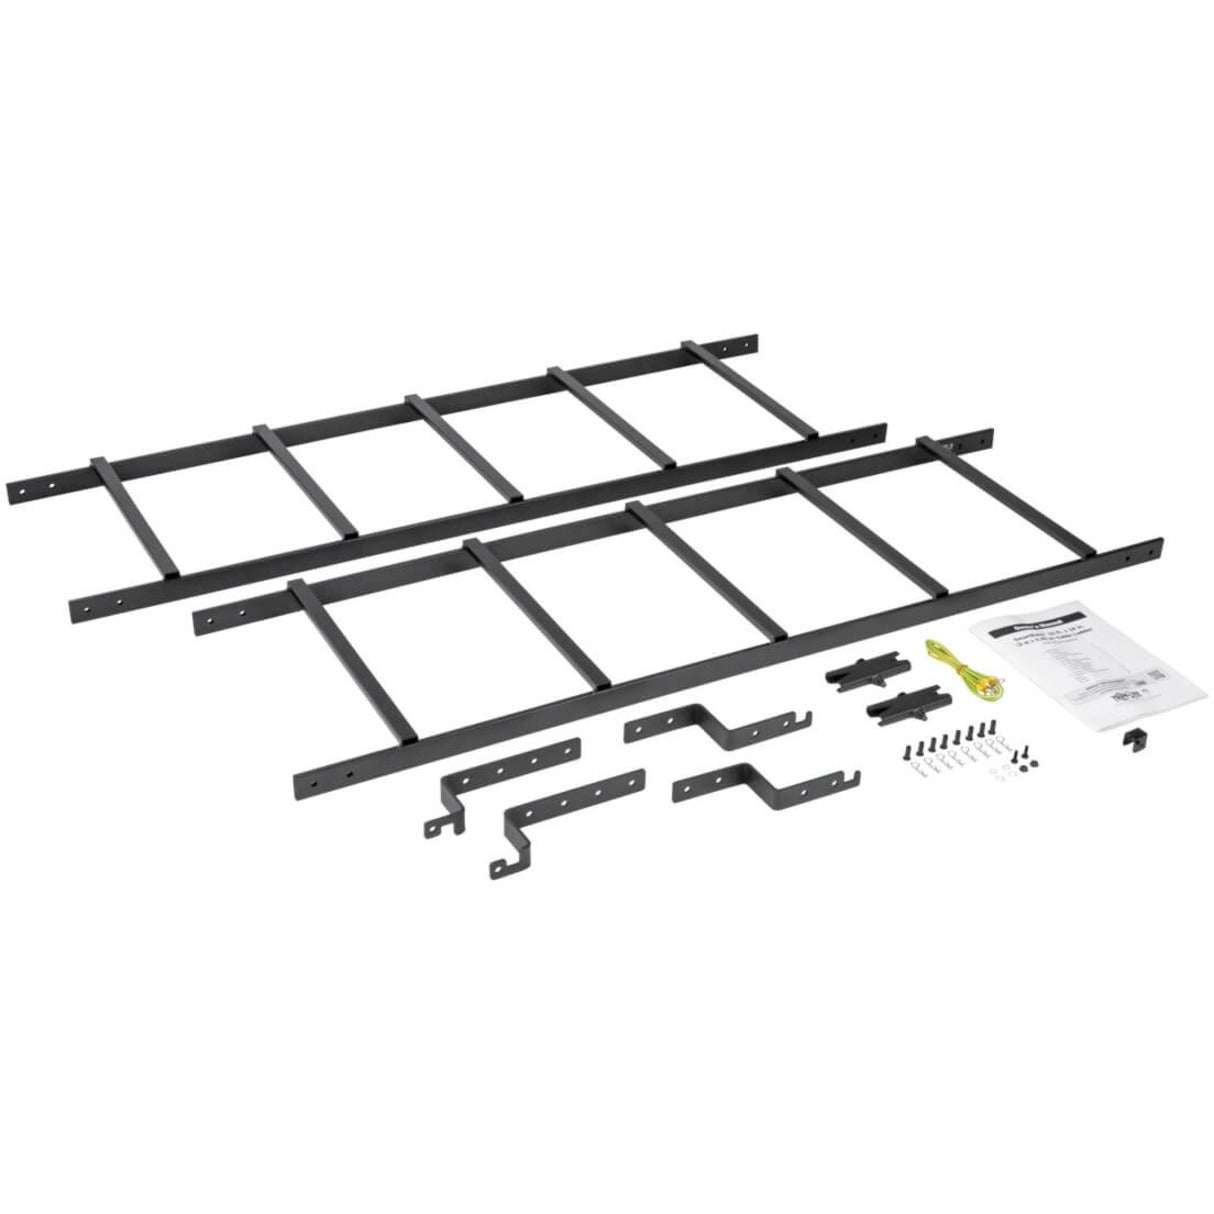 Tripp Lite SRCABLELADDER18 Cable Ladder, 10 x 1.5 ft, 5 Year Warranty, Compatible with Tripp Lite SmartRack Enclosures